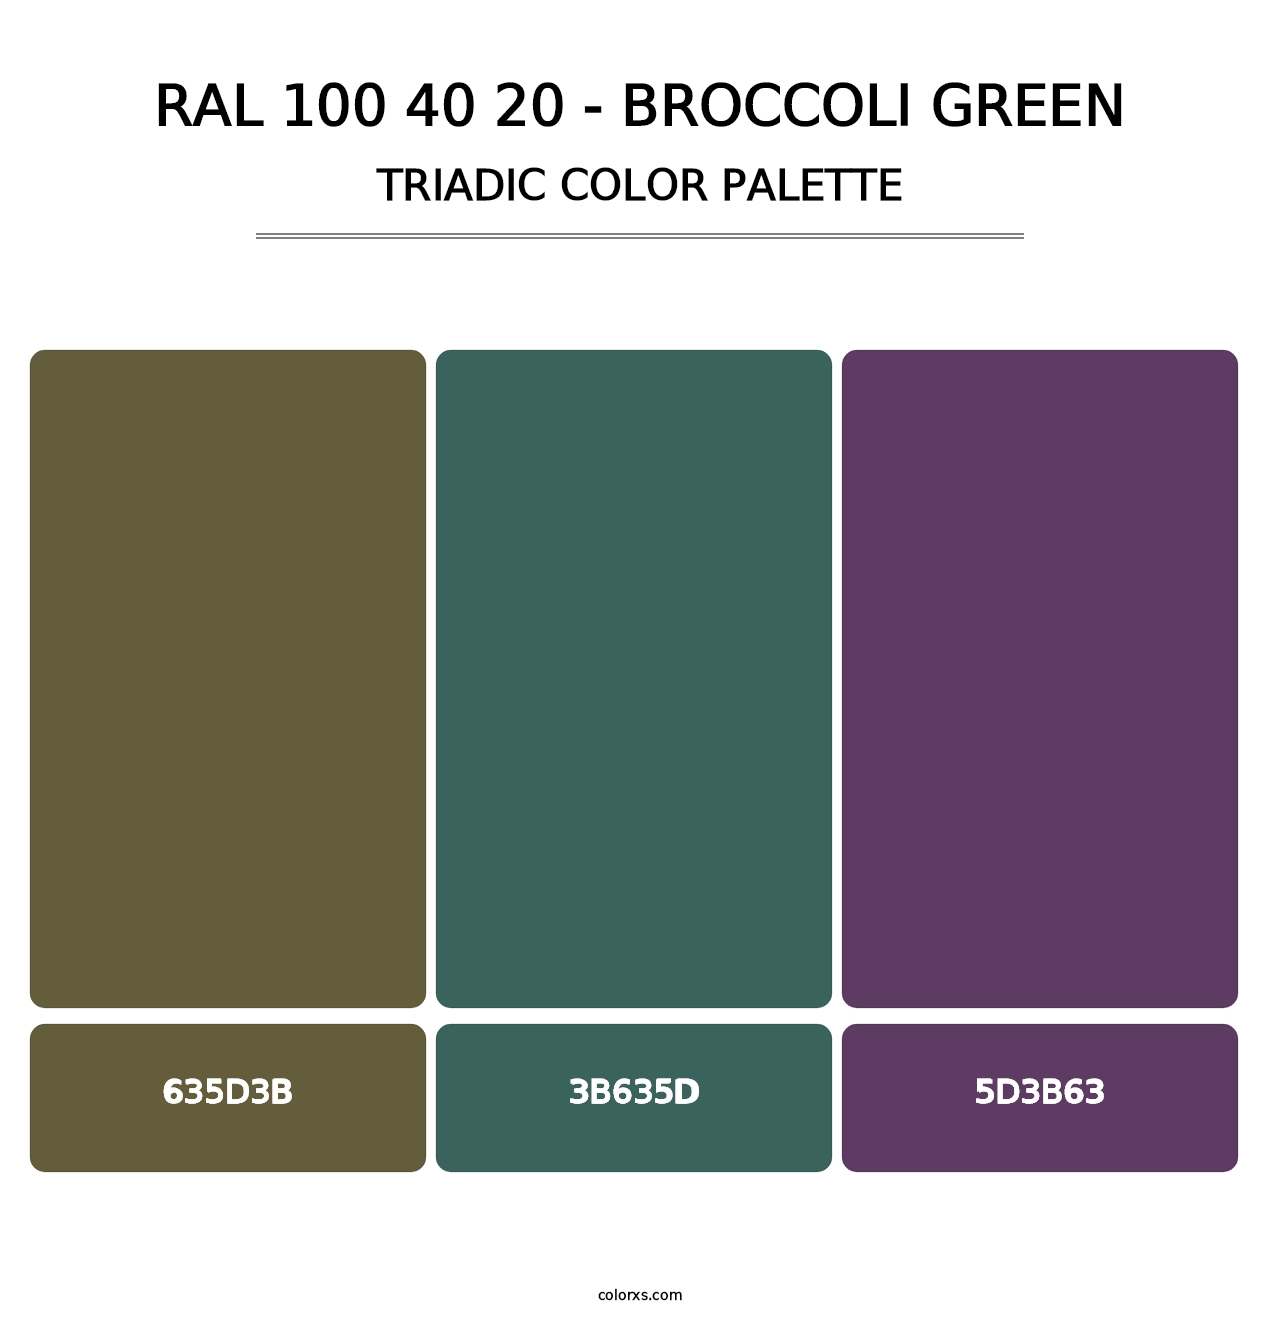 RAL 100 40 20 - Broccoli Green - Triadic Color Palette